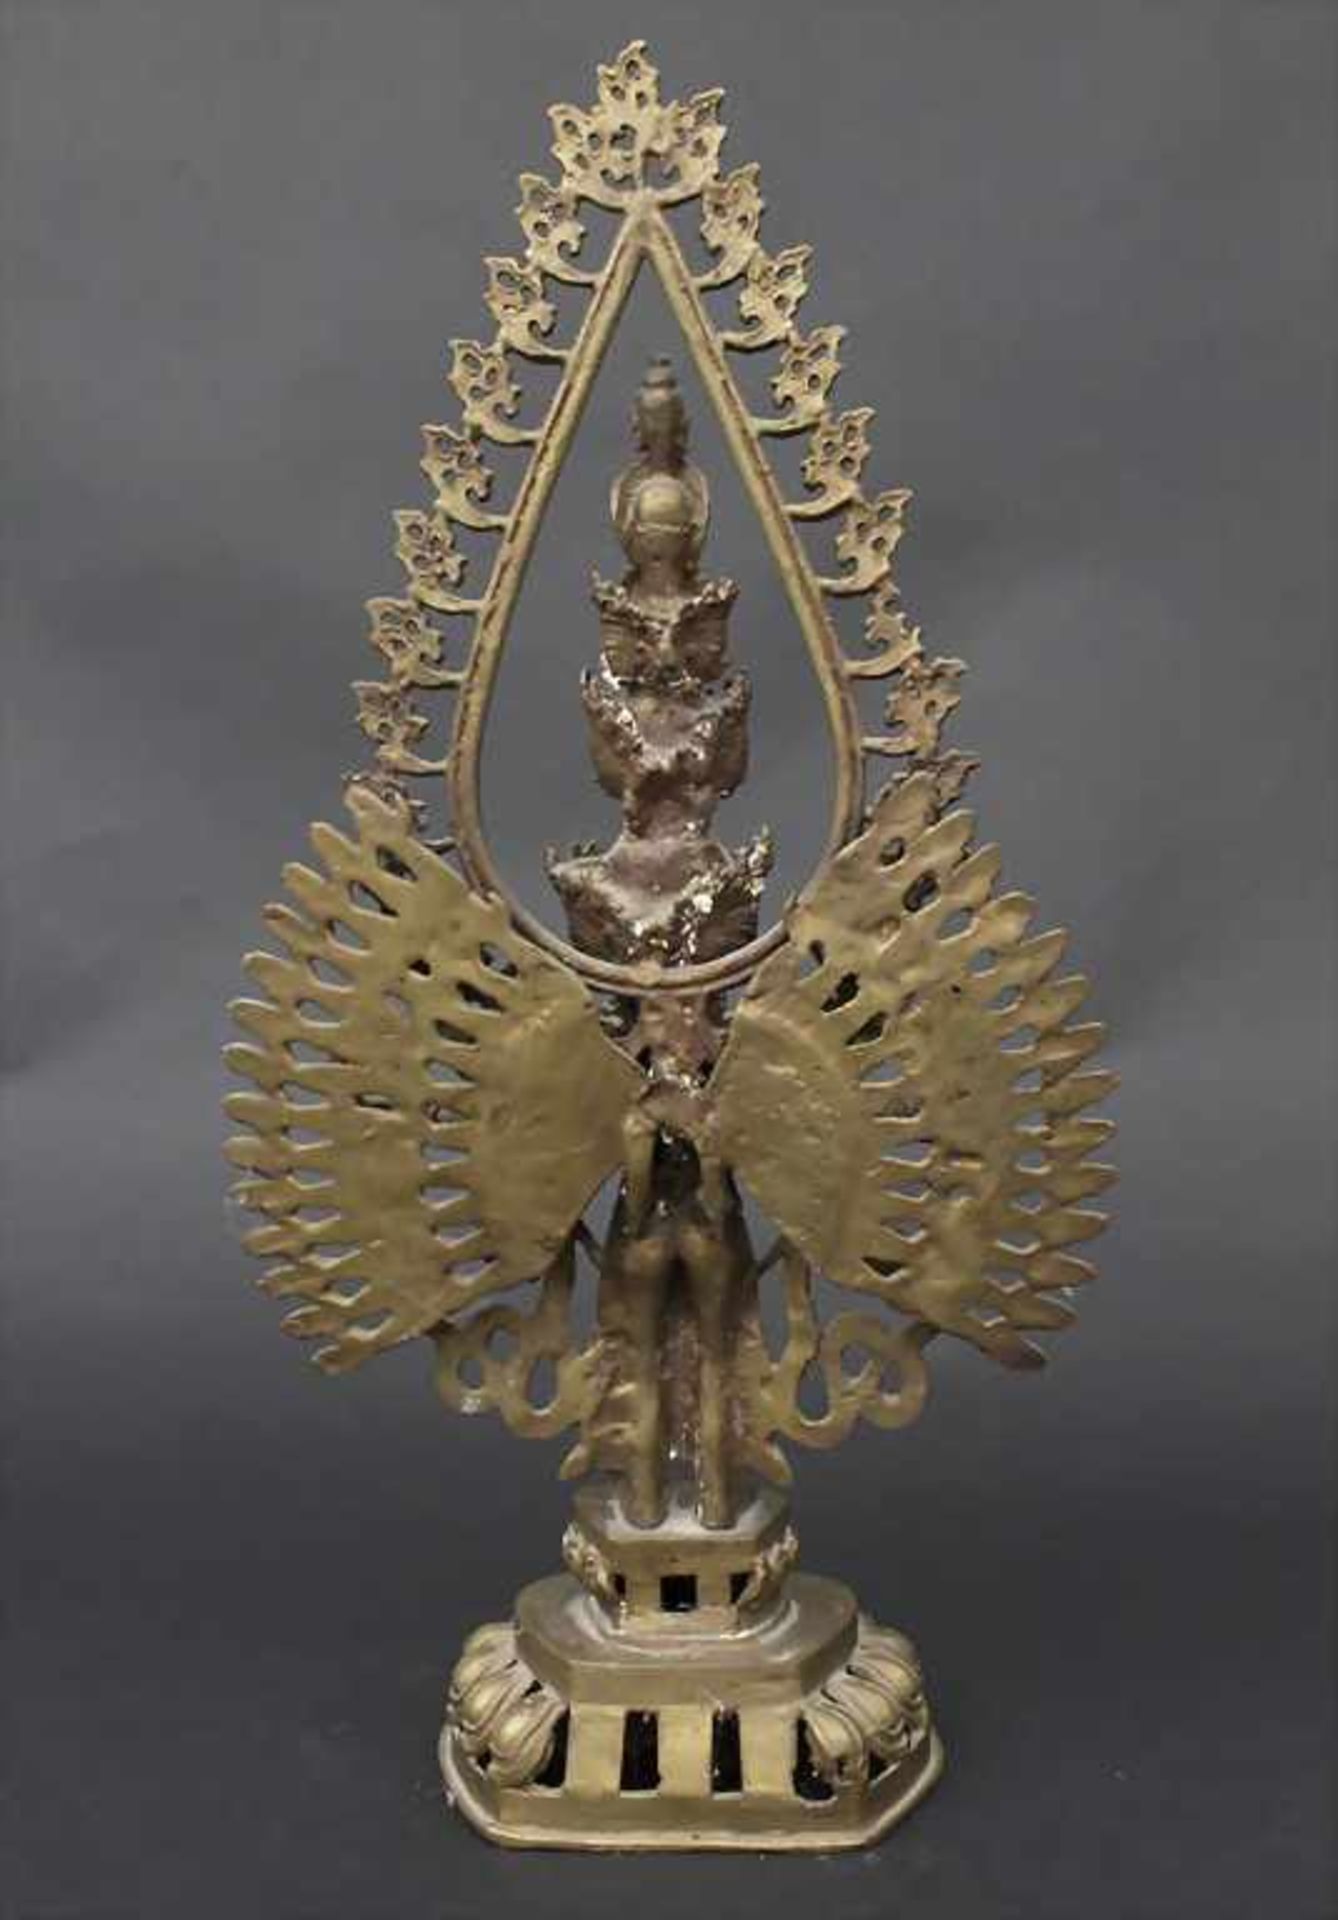 Boddhisattva-Figur 'Avalokiteshvara' / A boddhisattva figure 'Avalokiteshvara', tibeto-chinesisch, - Image 3 of 4